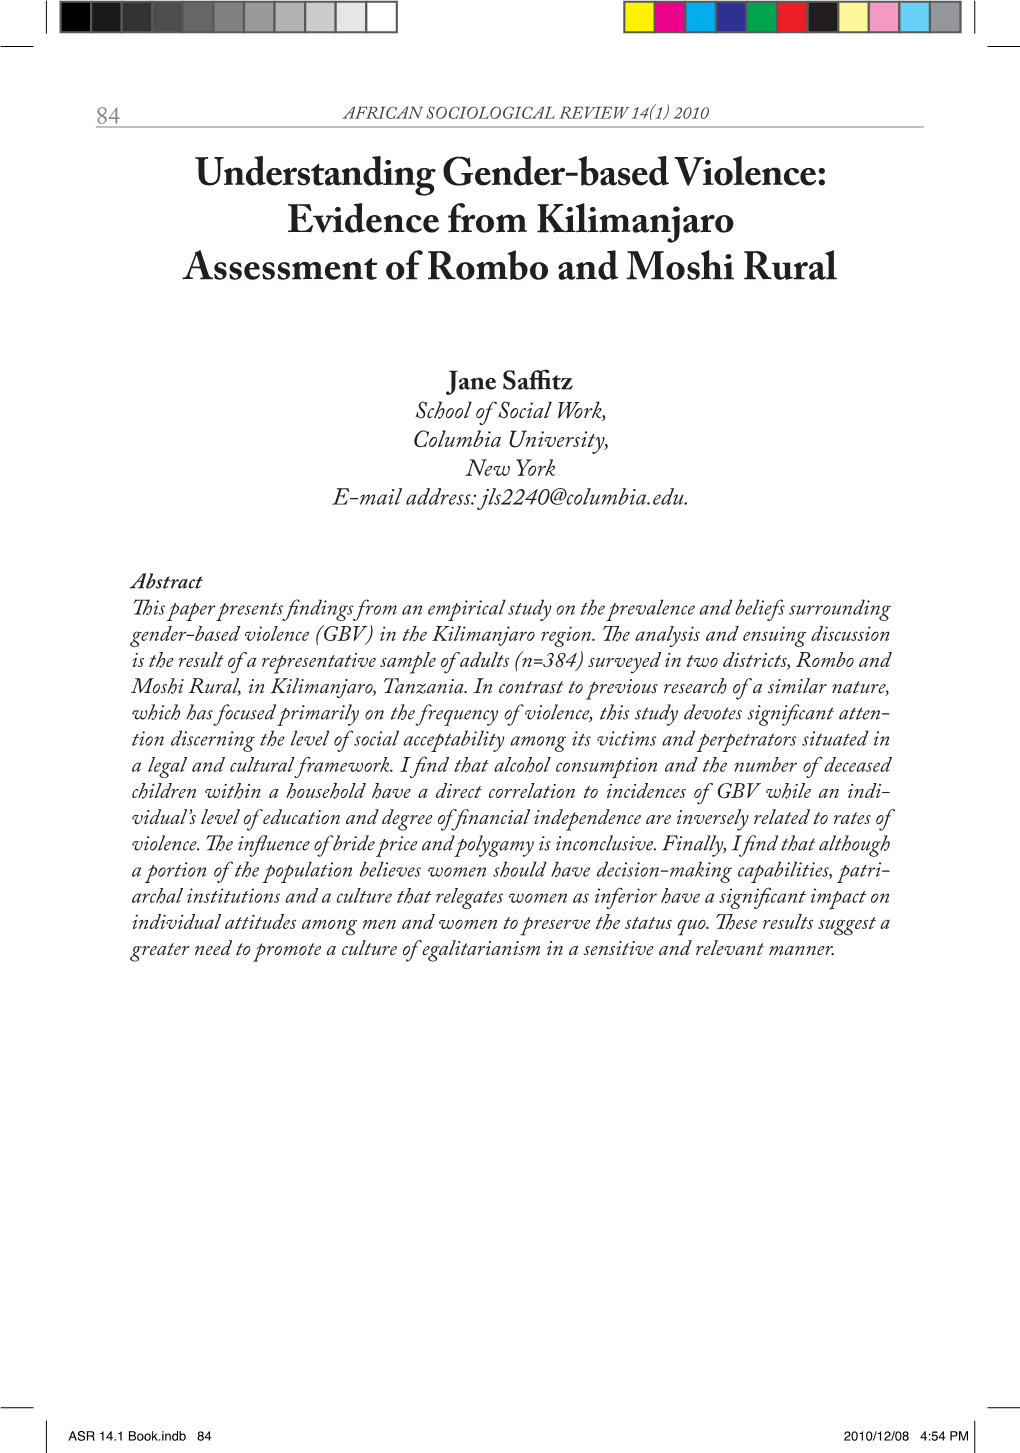 Understanding Gender-Based Violence: Evidence from Kilimanjaro Assessment of Rombo and Moshi Rural